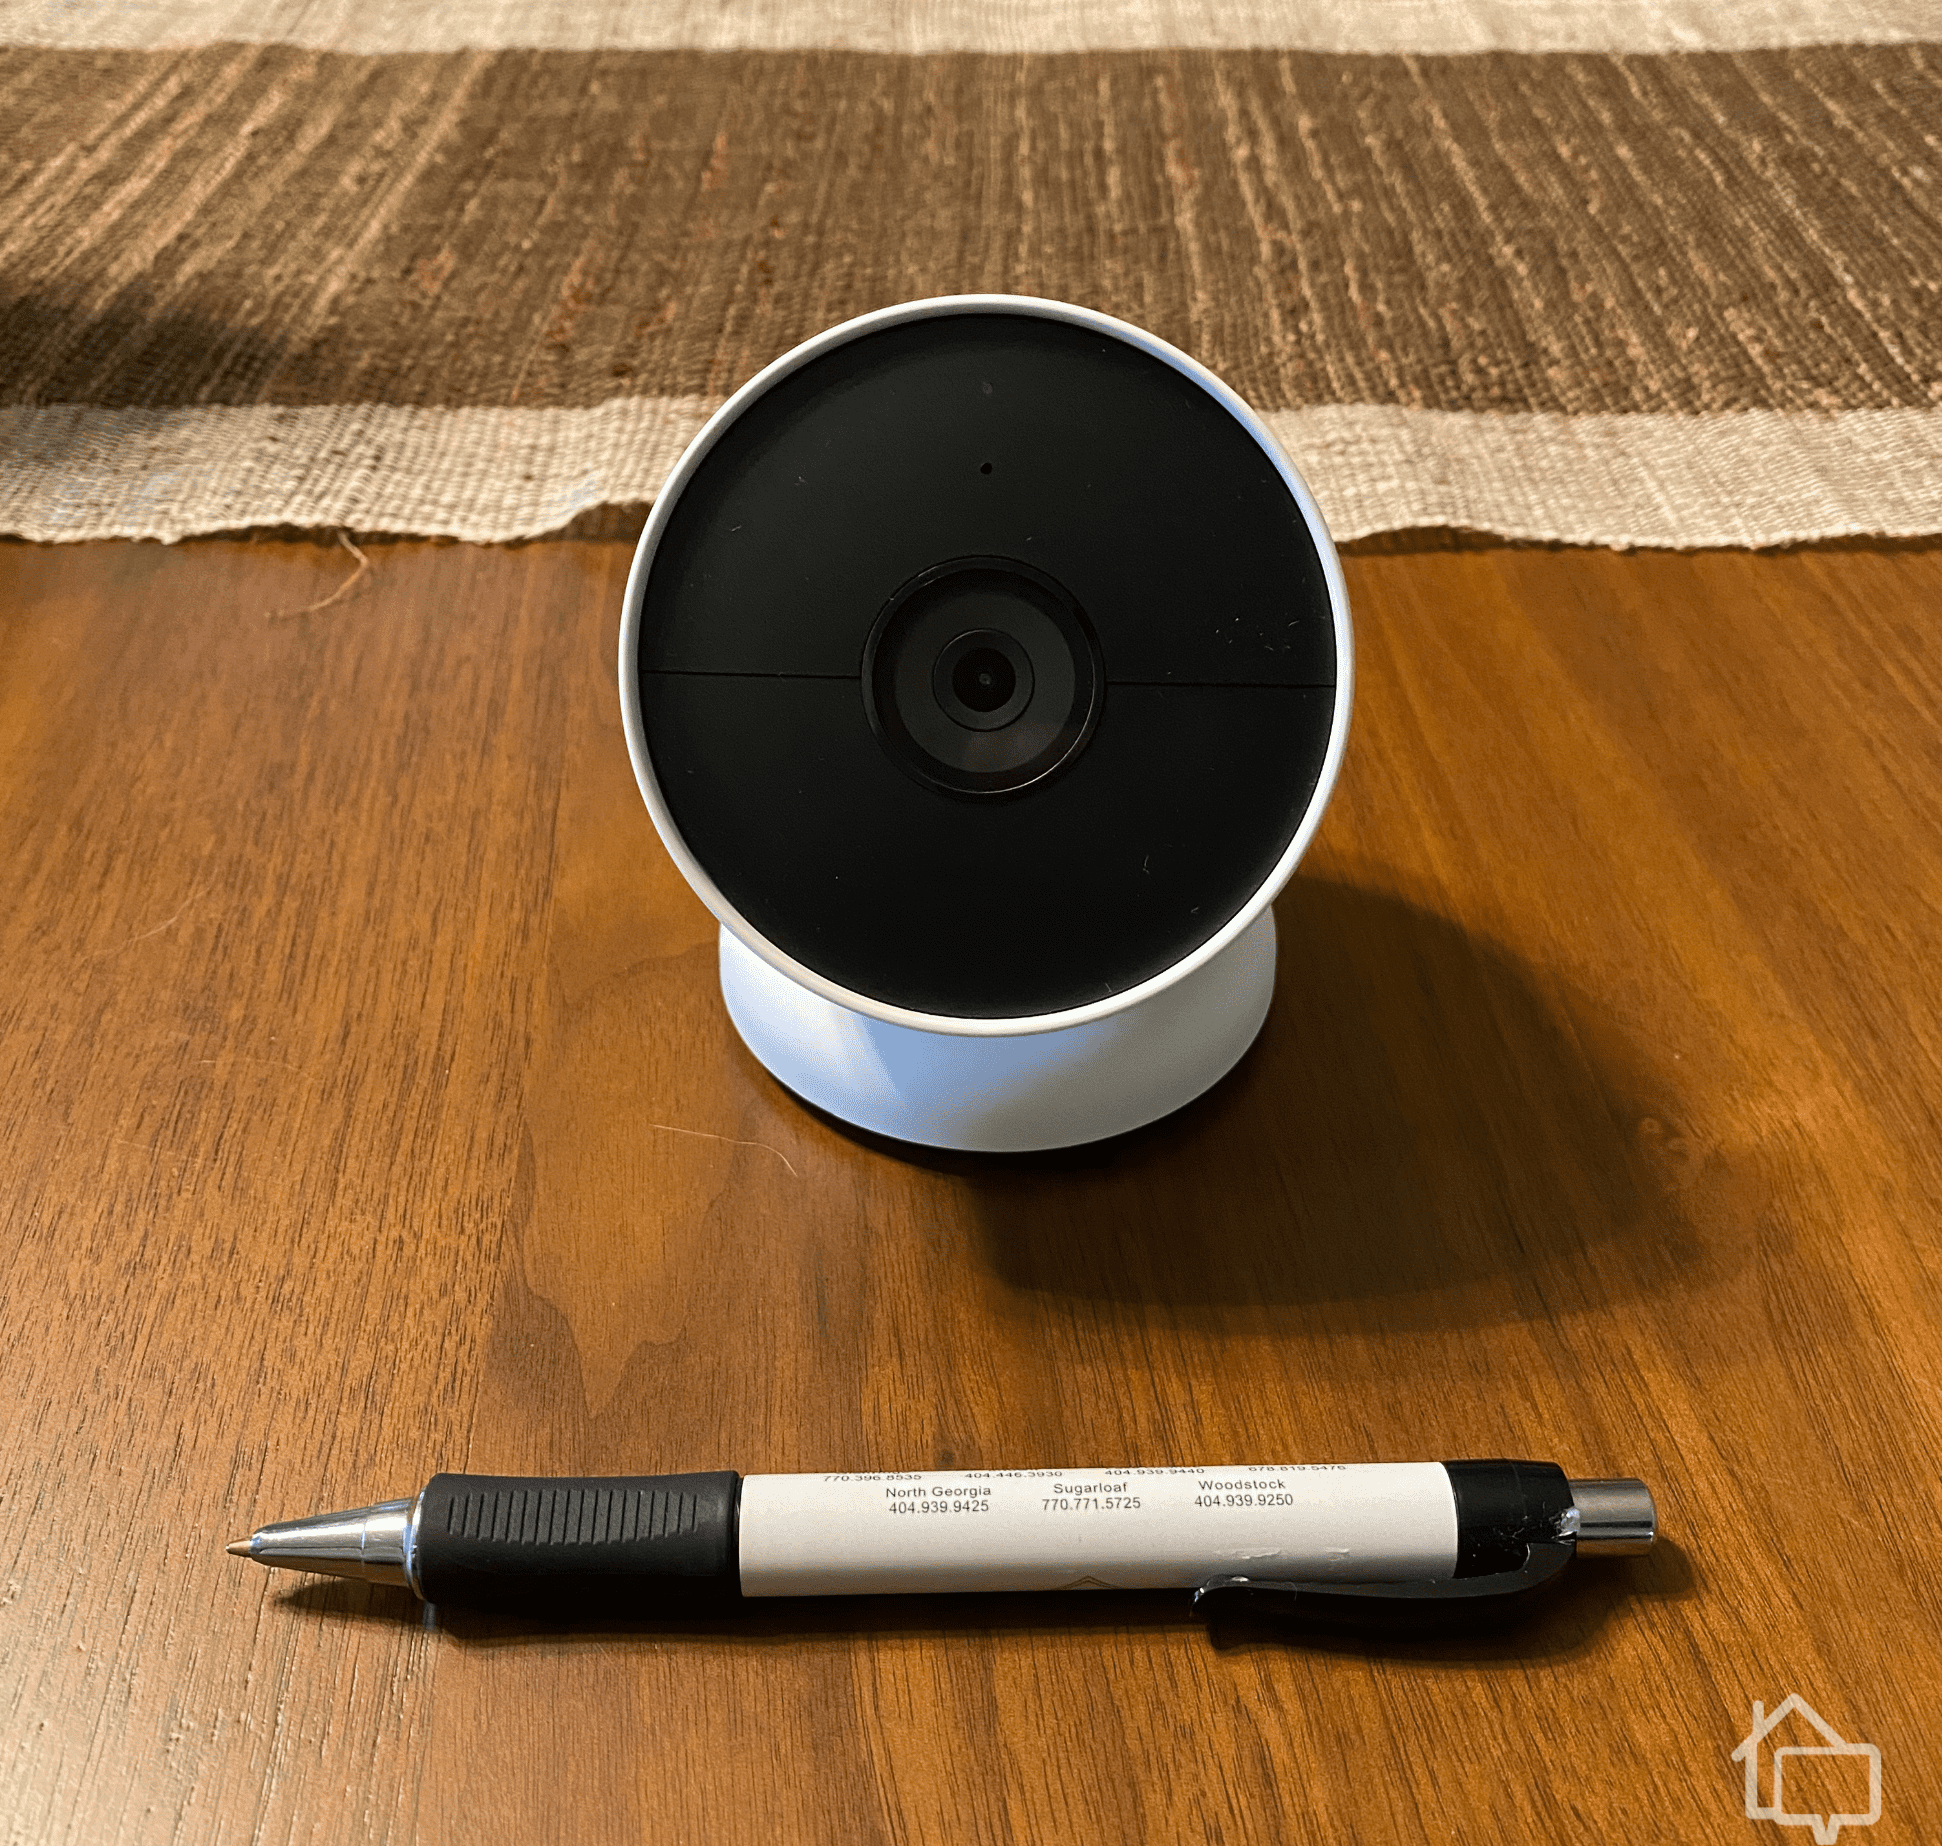 Google Nest Cam. Pen for Scale